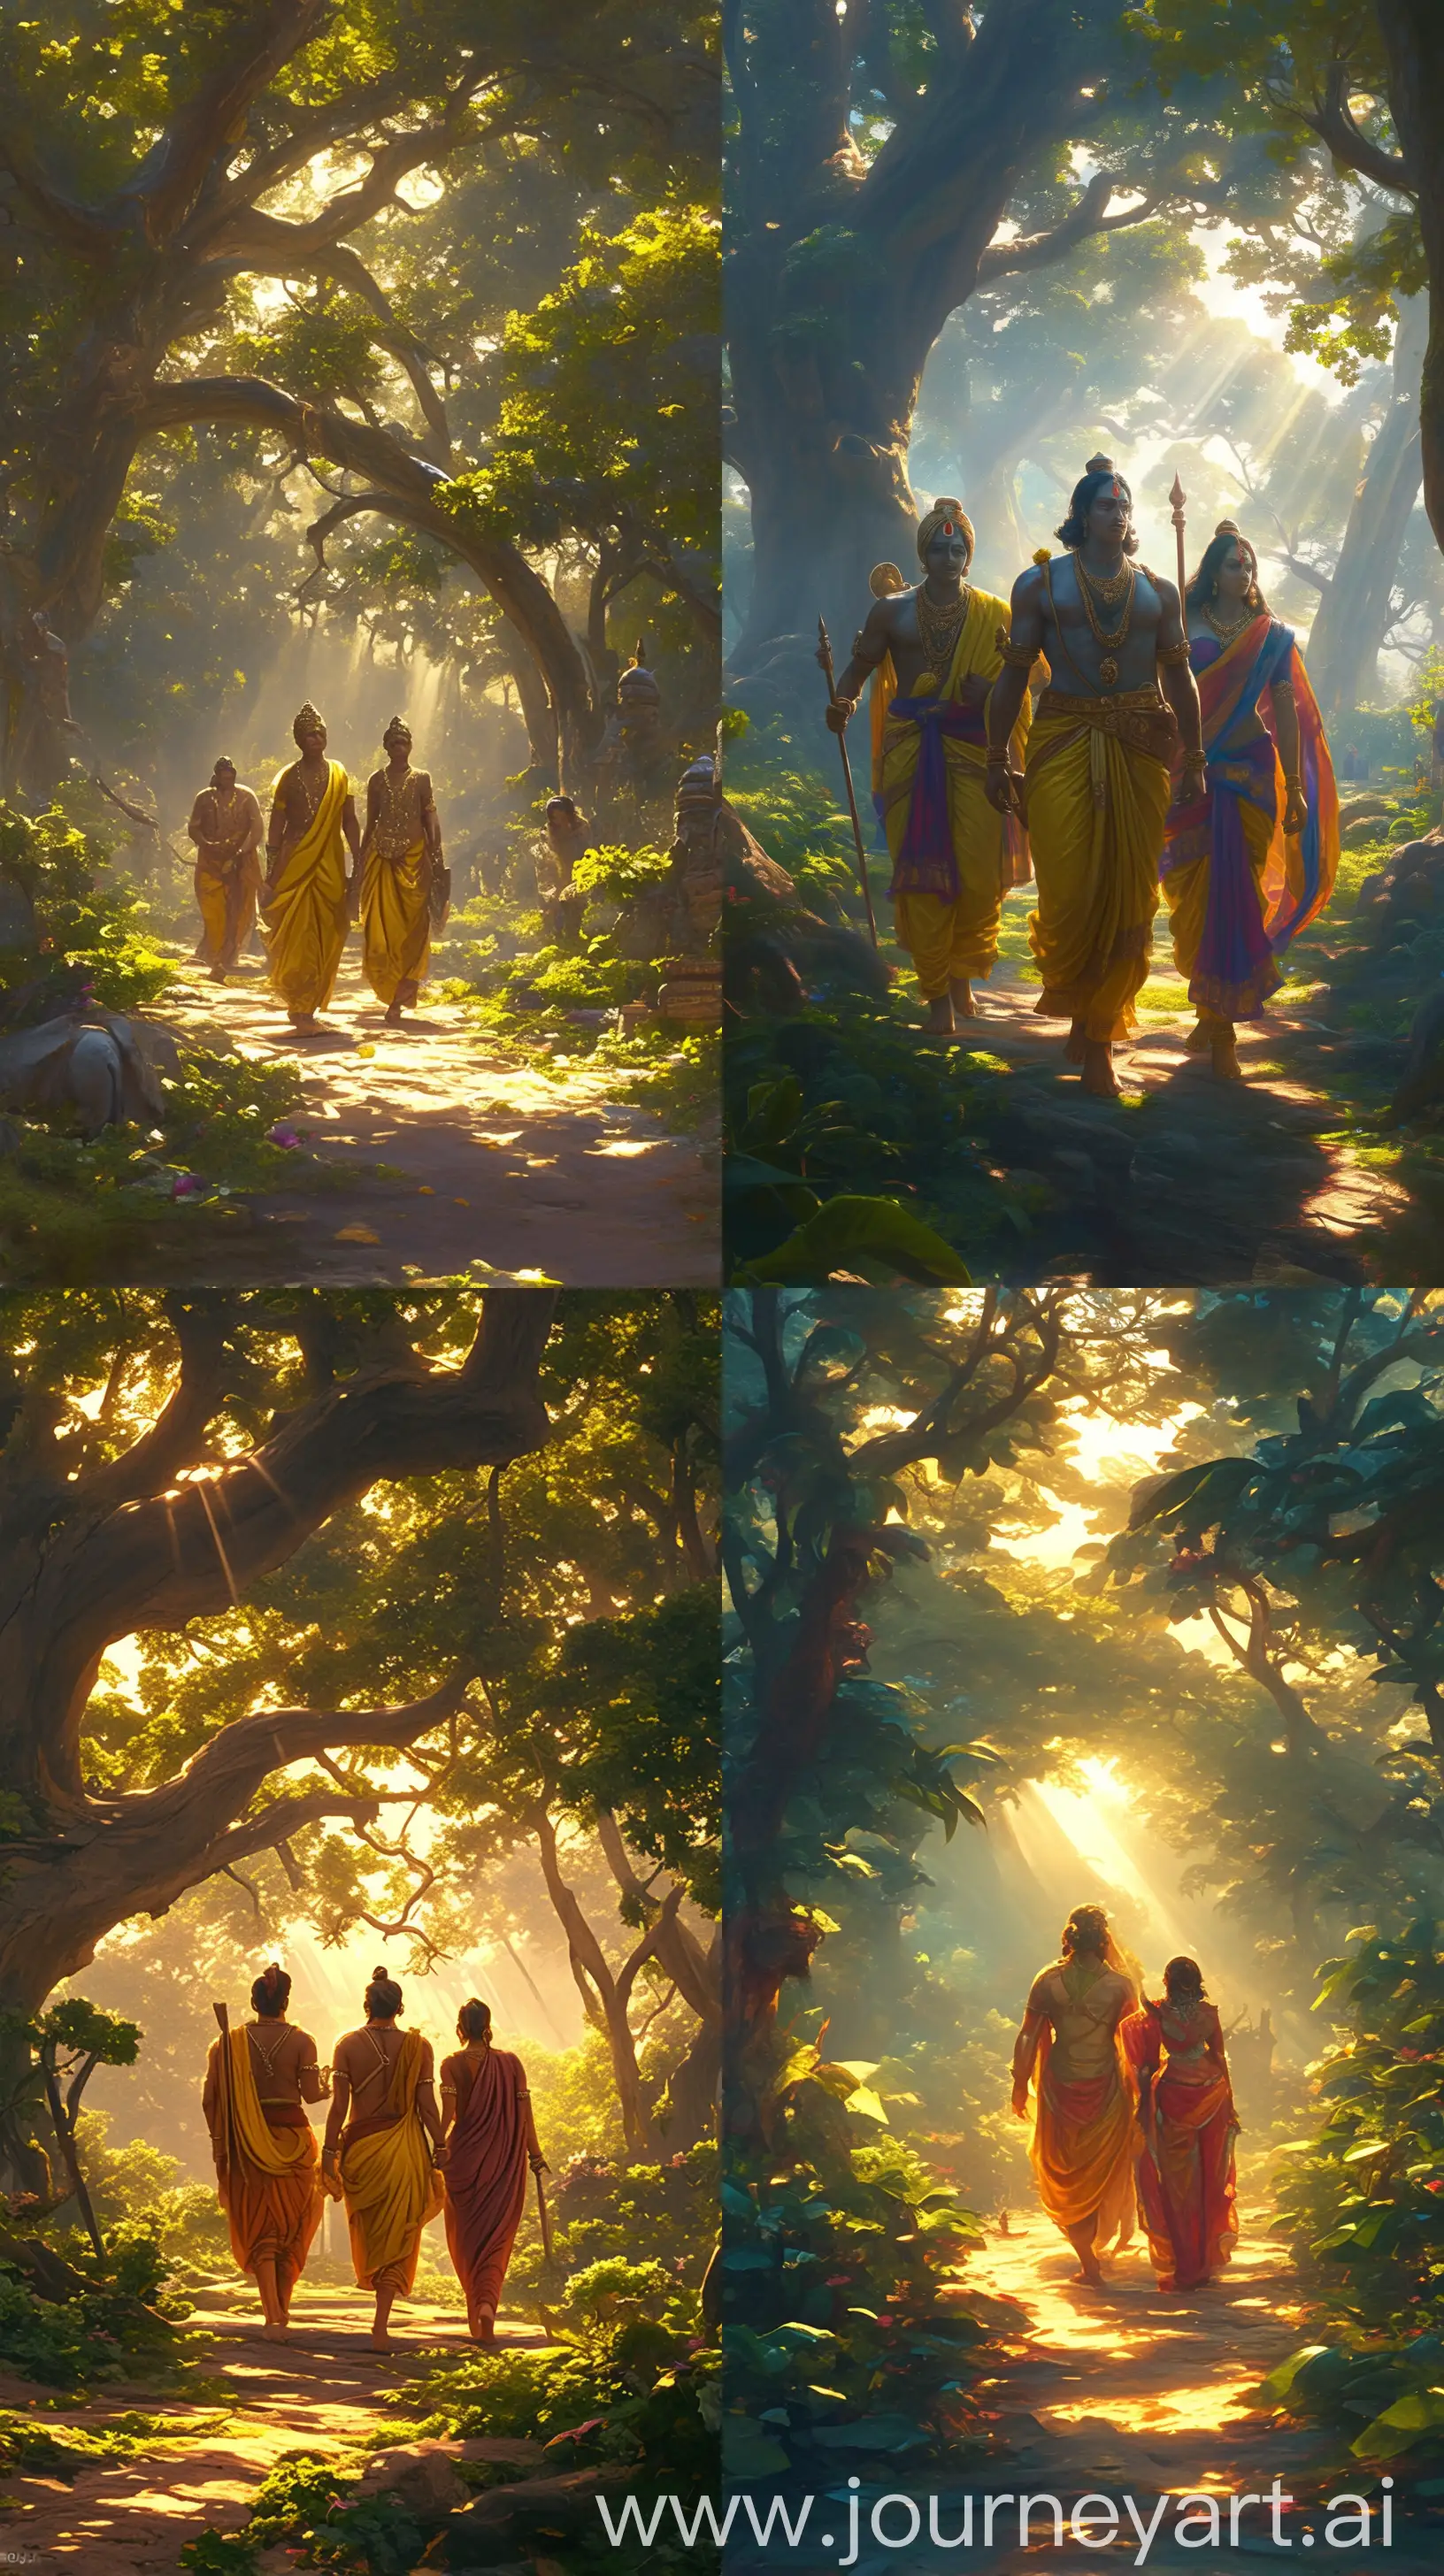 Serene-Ram-Lakshman-and-Sita-Stroll-Through-Ancient-Indian-Forest